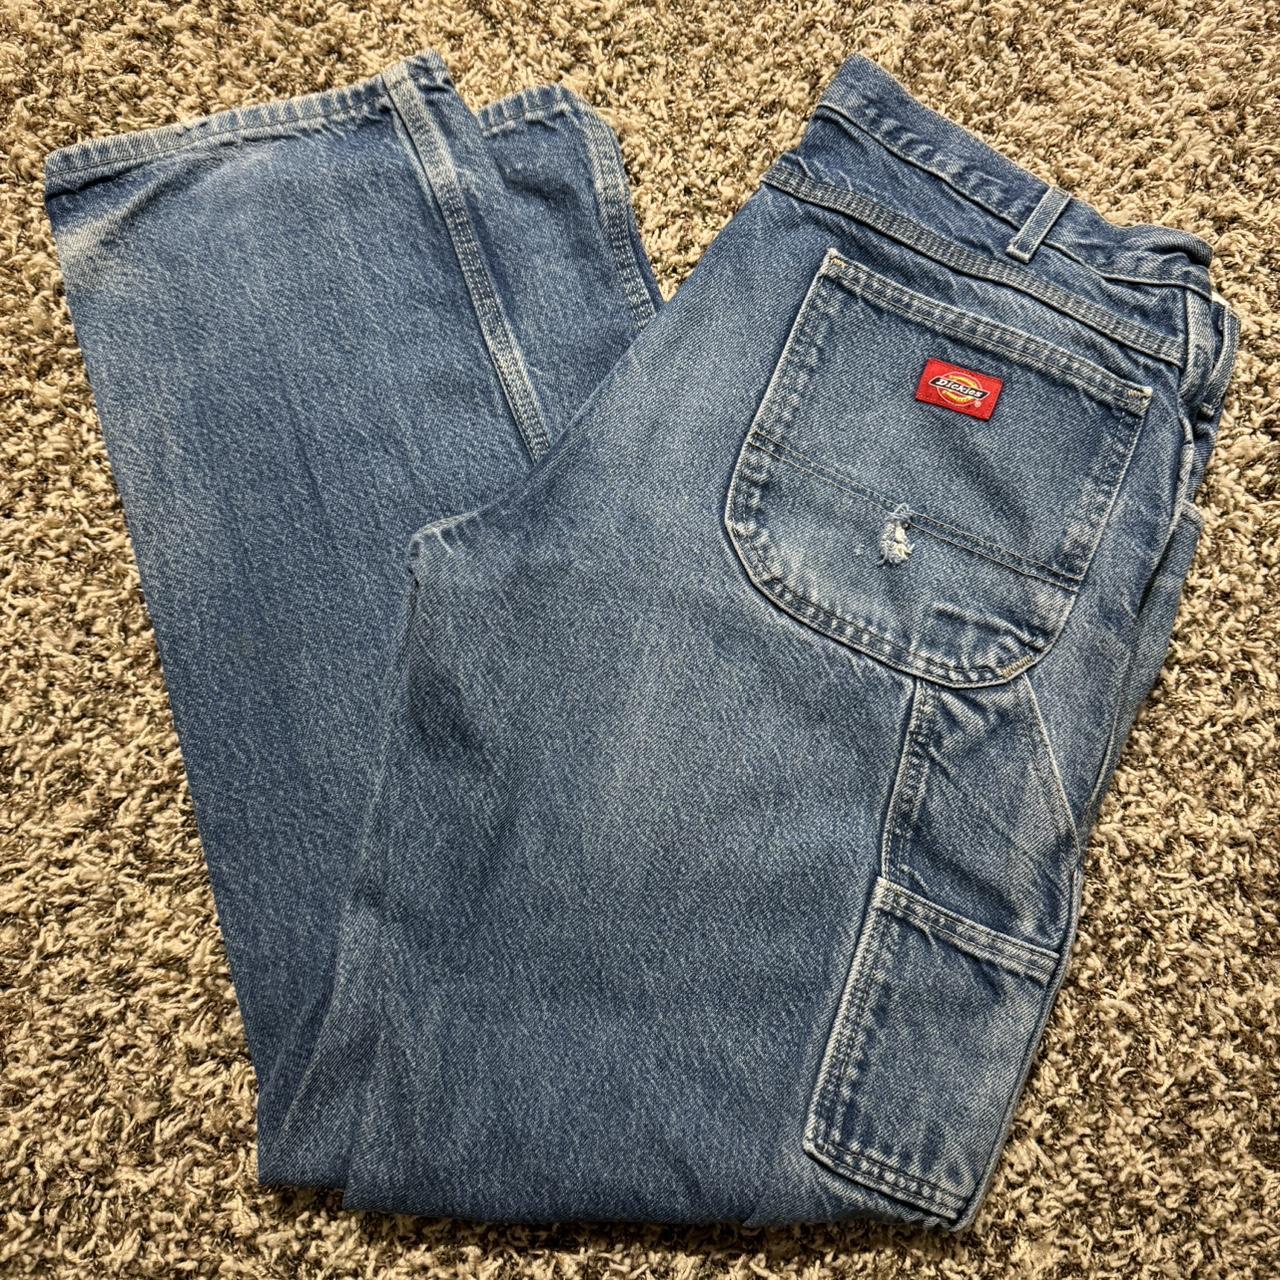 Vintage Dickies carpenter jeans great wash color and... - Depop